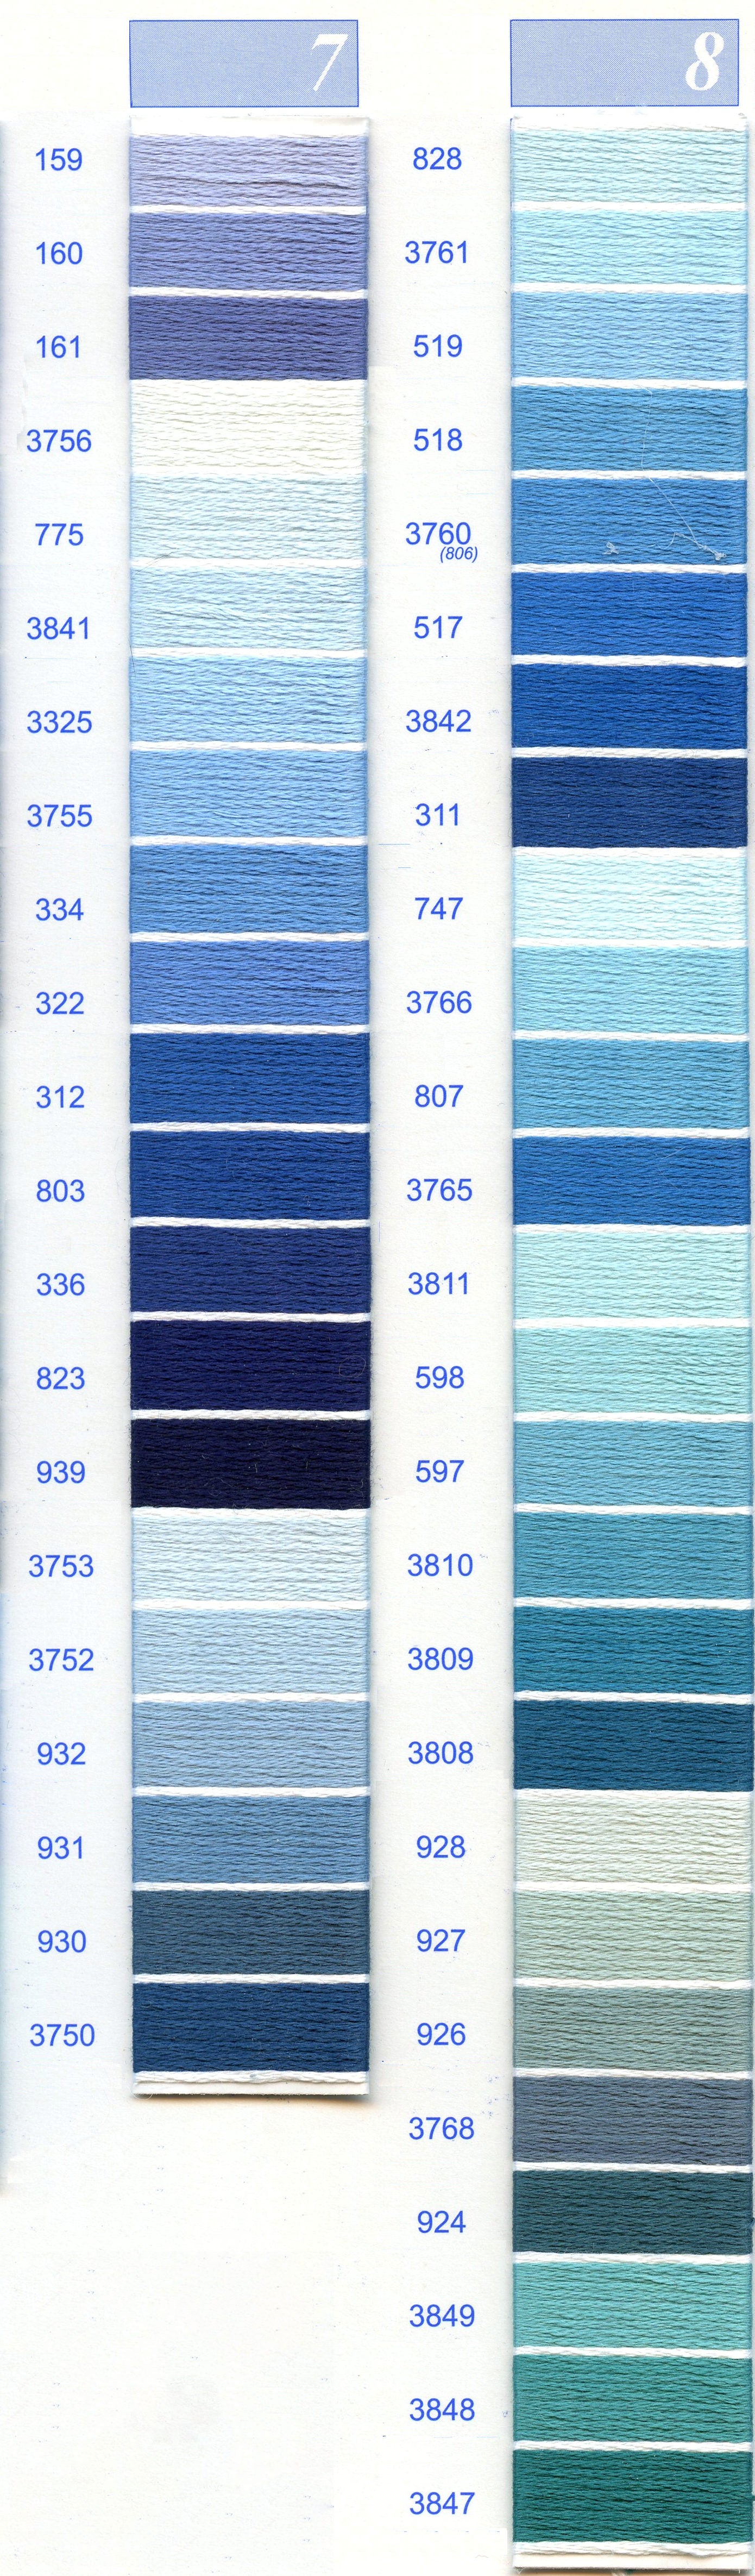 DMC Embroidery Floss Chart - Columns 7 & 8